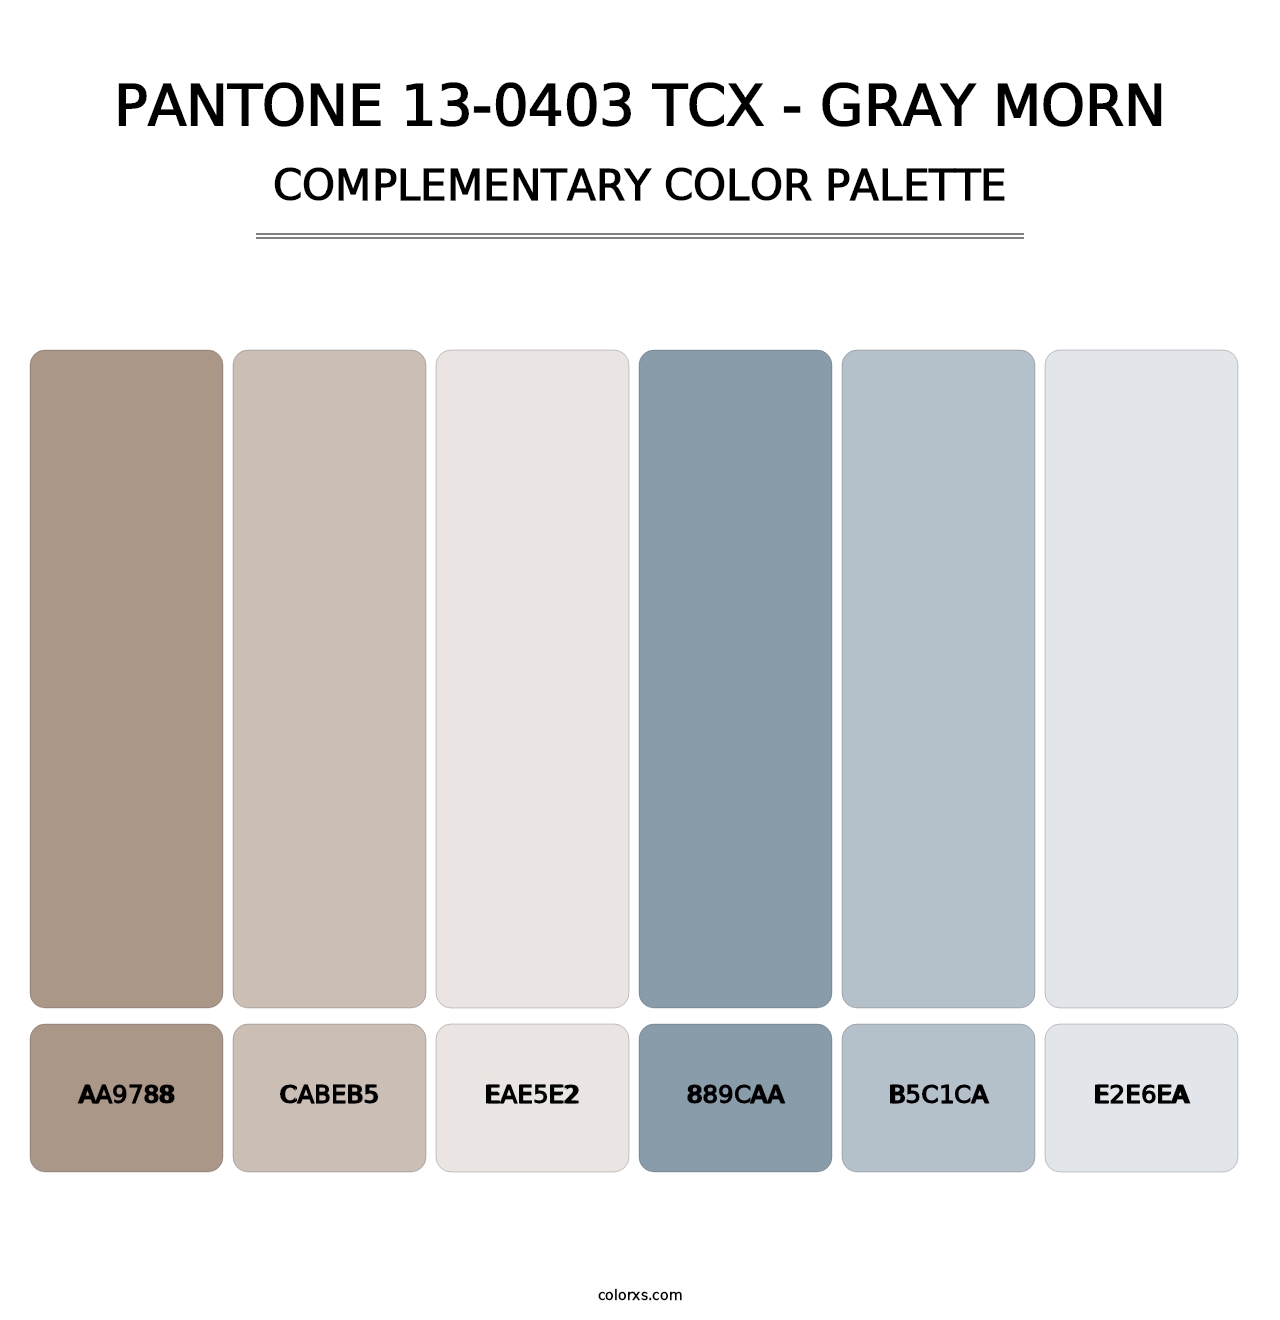 PANTONE 13-0403 TCX - Gray Morn - Complementary Color Palette